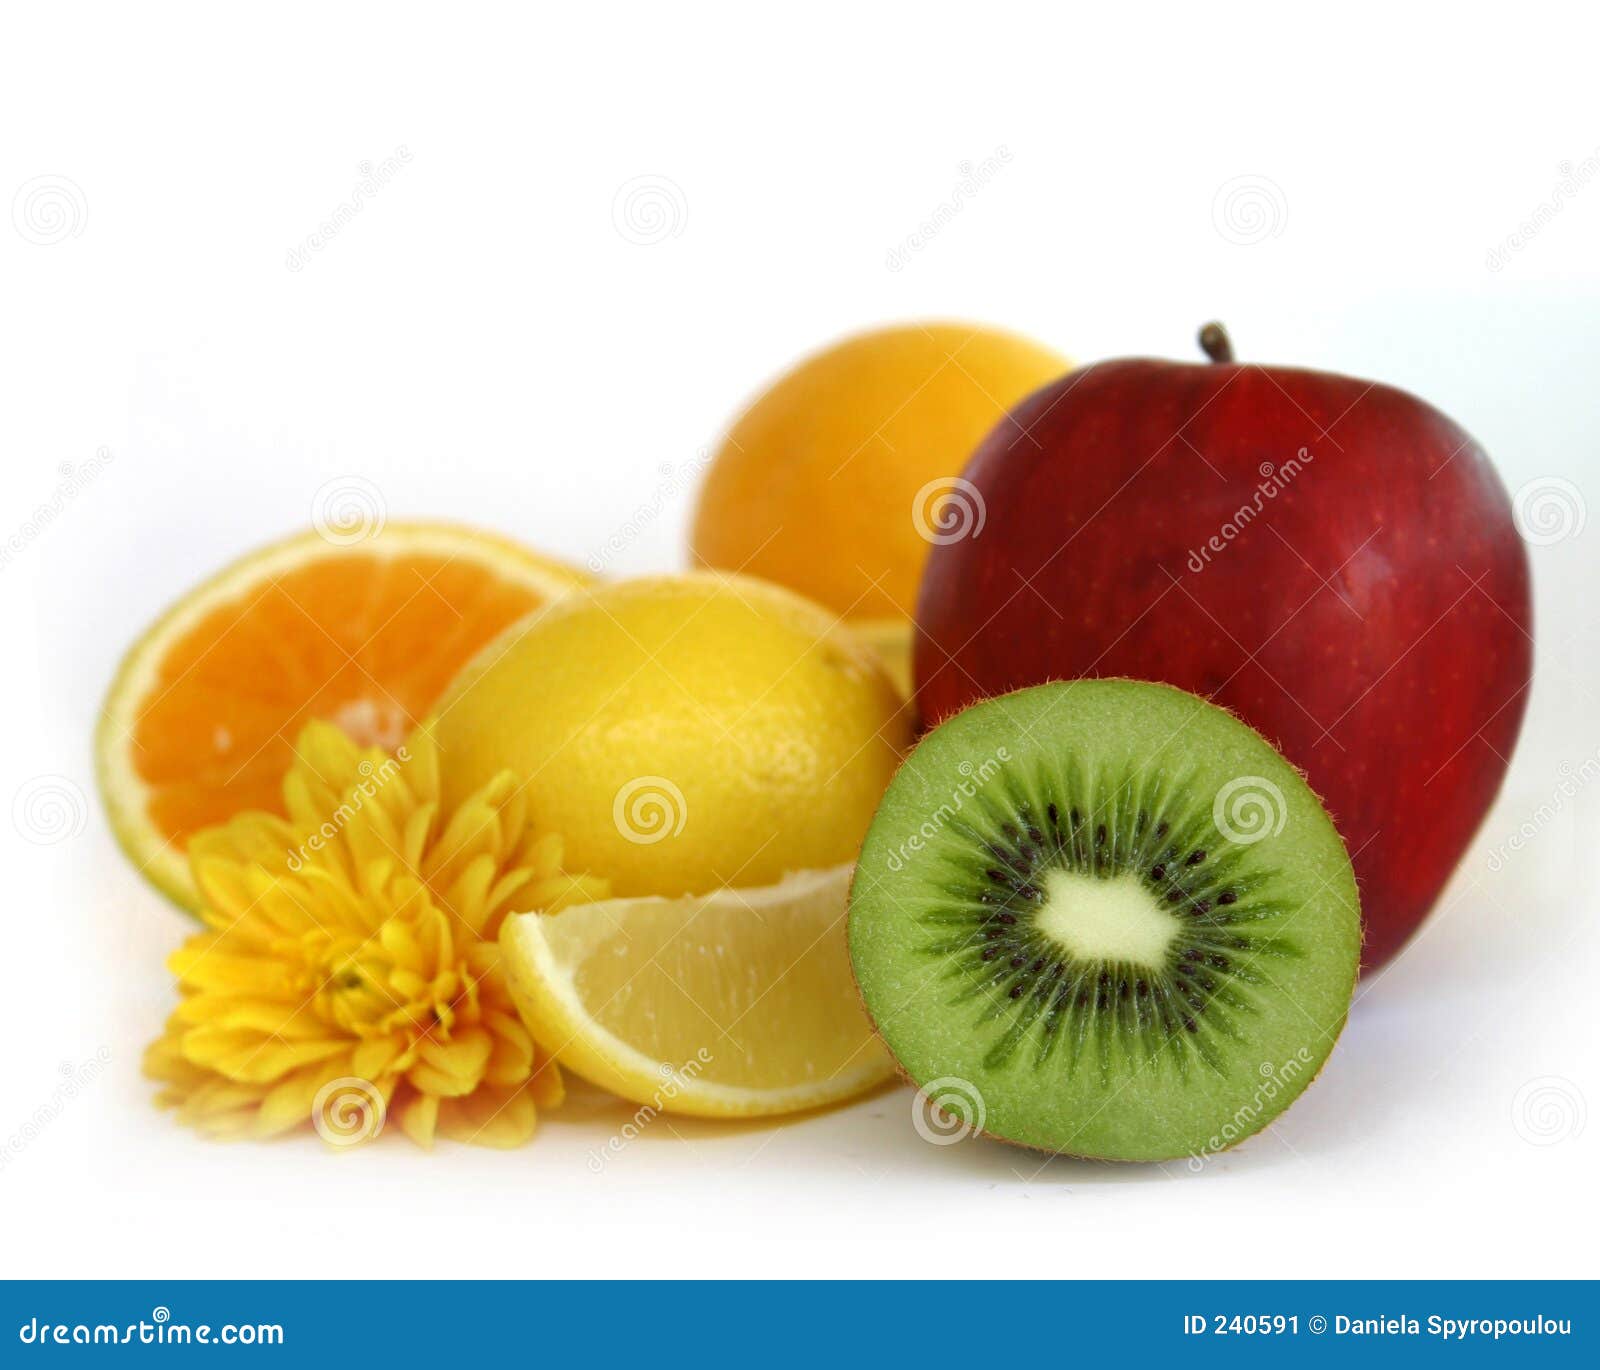 assorted fresh fruits